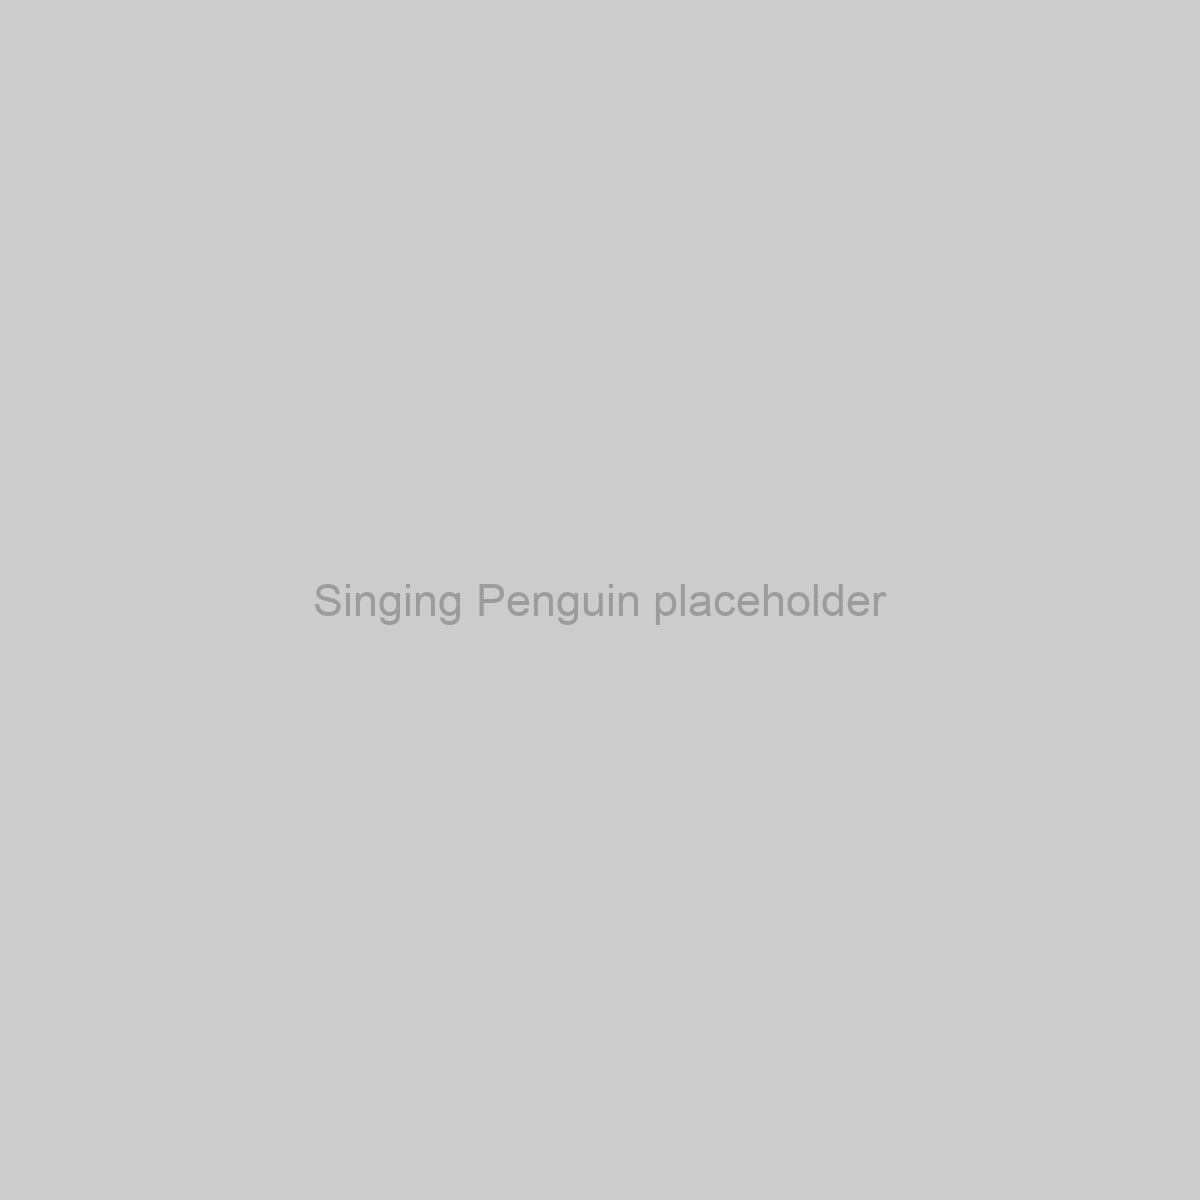 Singing Penguin Placeholder Image